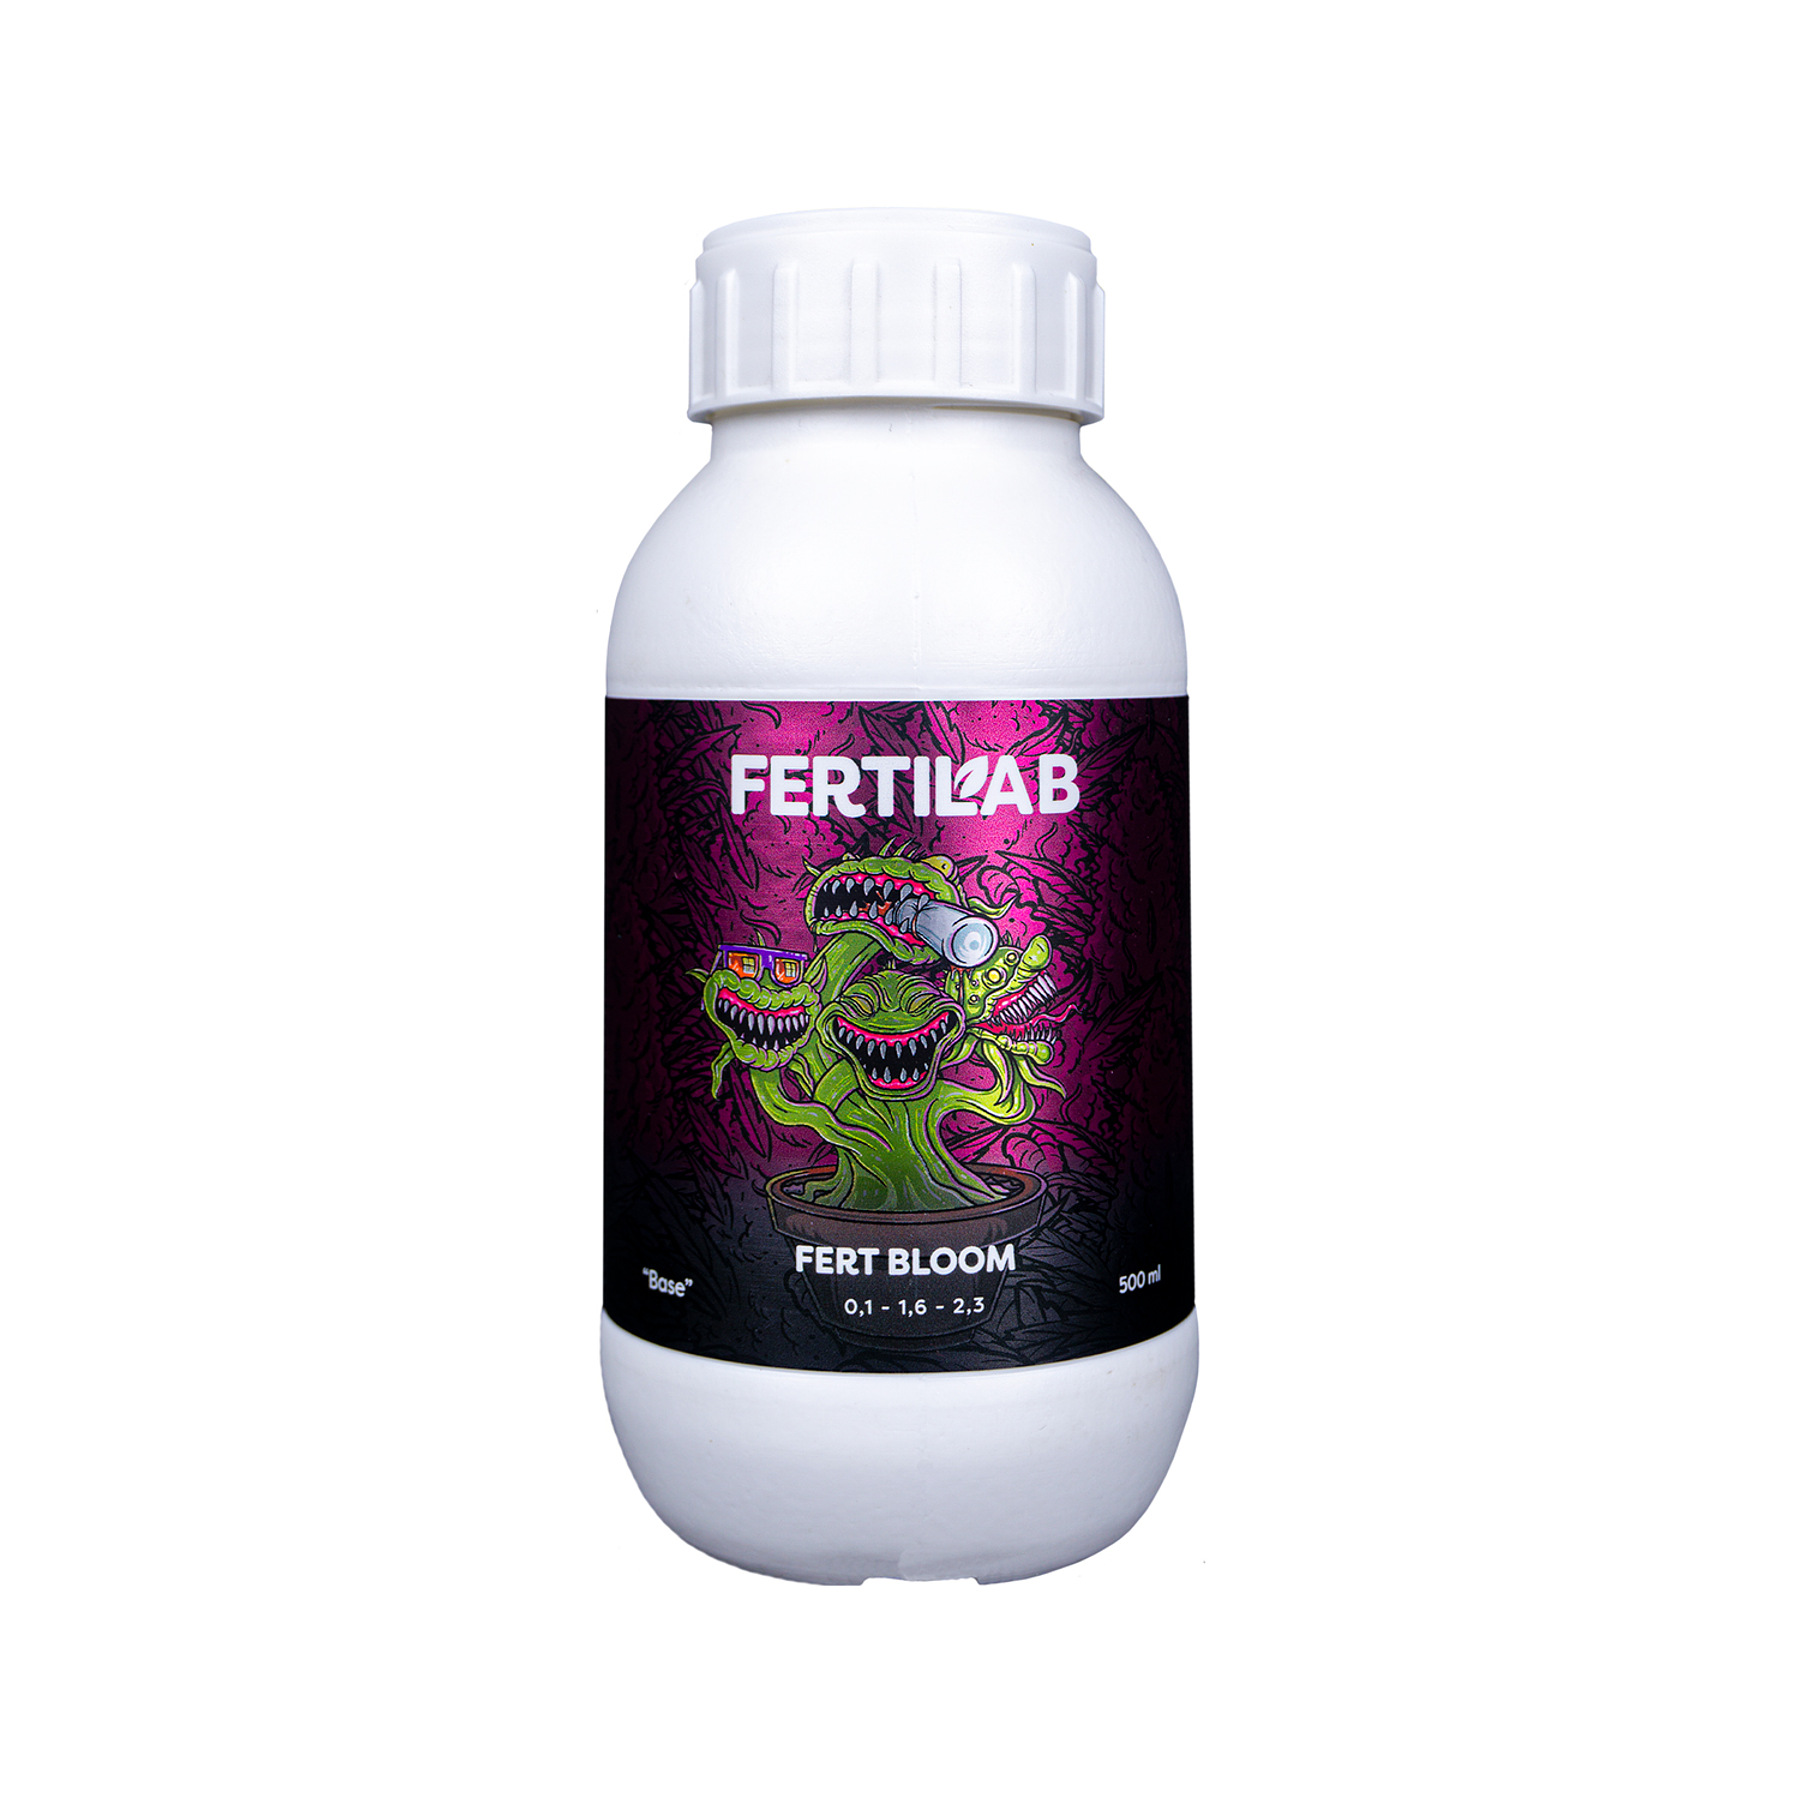 Fert Bloom - 500 ml - Fertilizante Base Floración | Fertilab ®